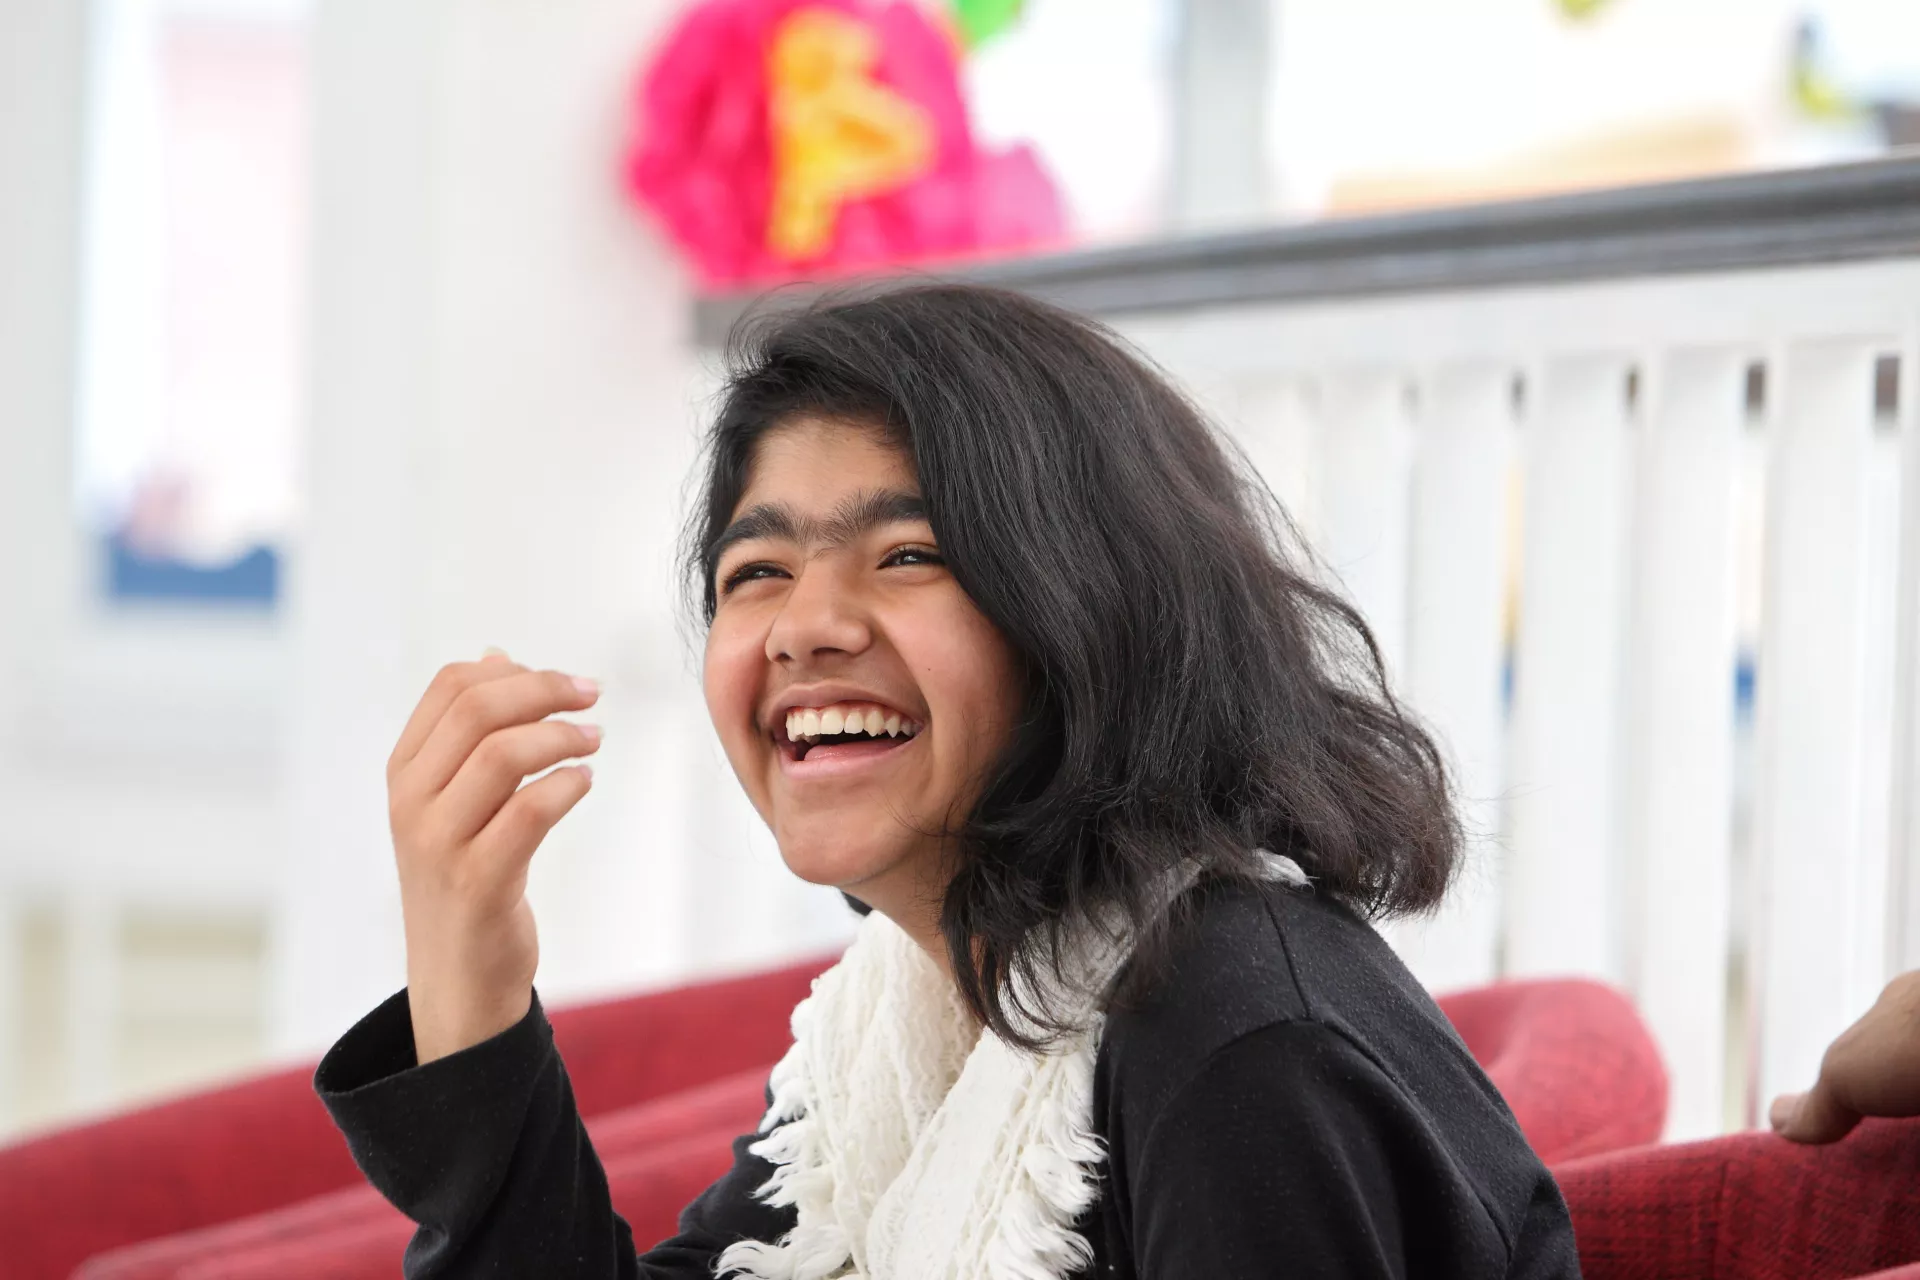 An Afghan teenage girl laughing